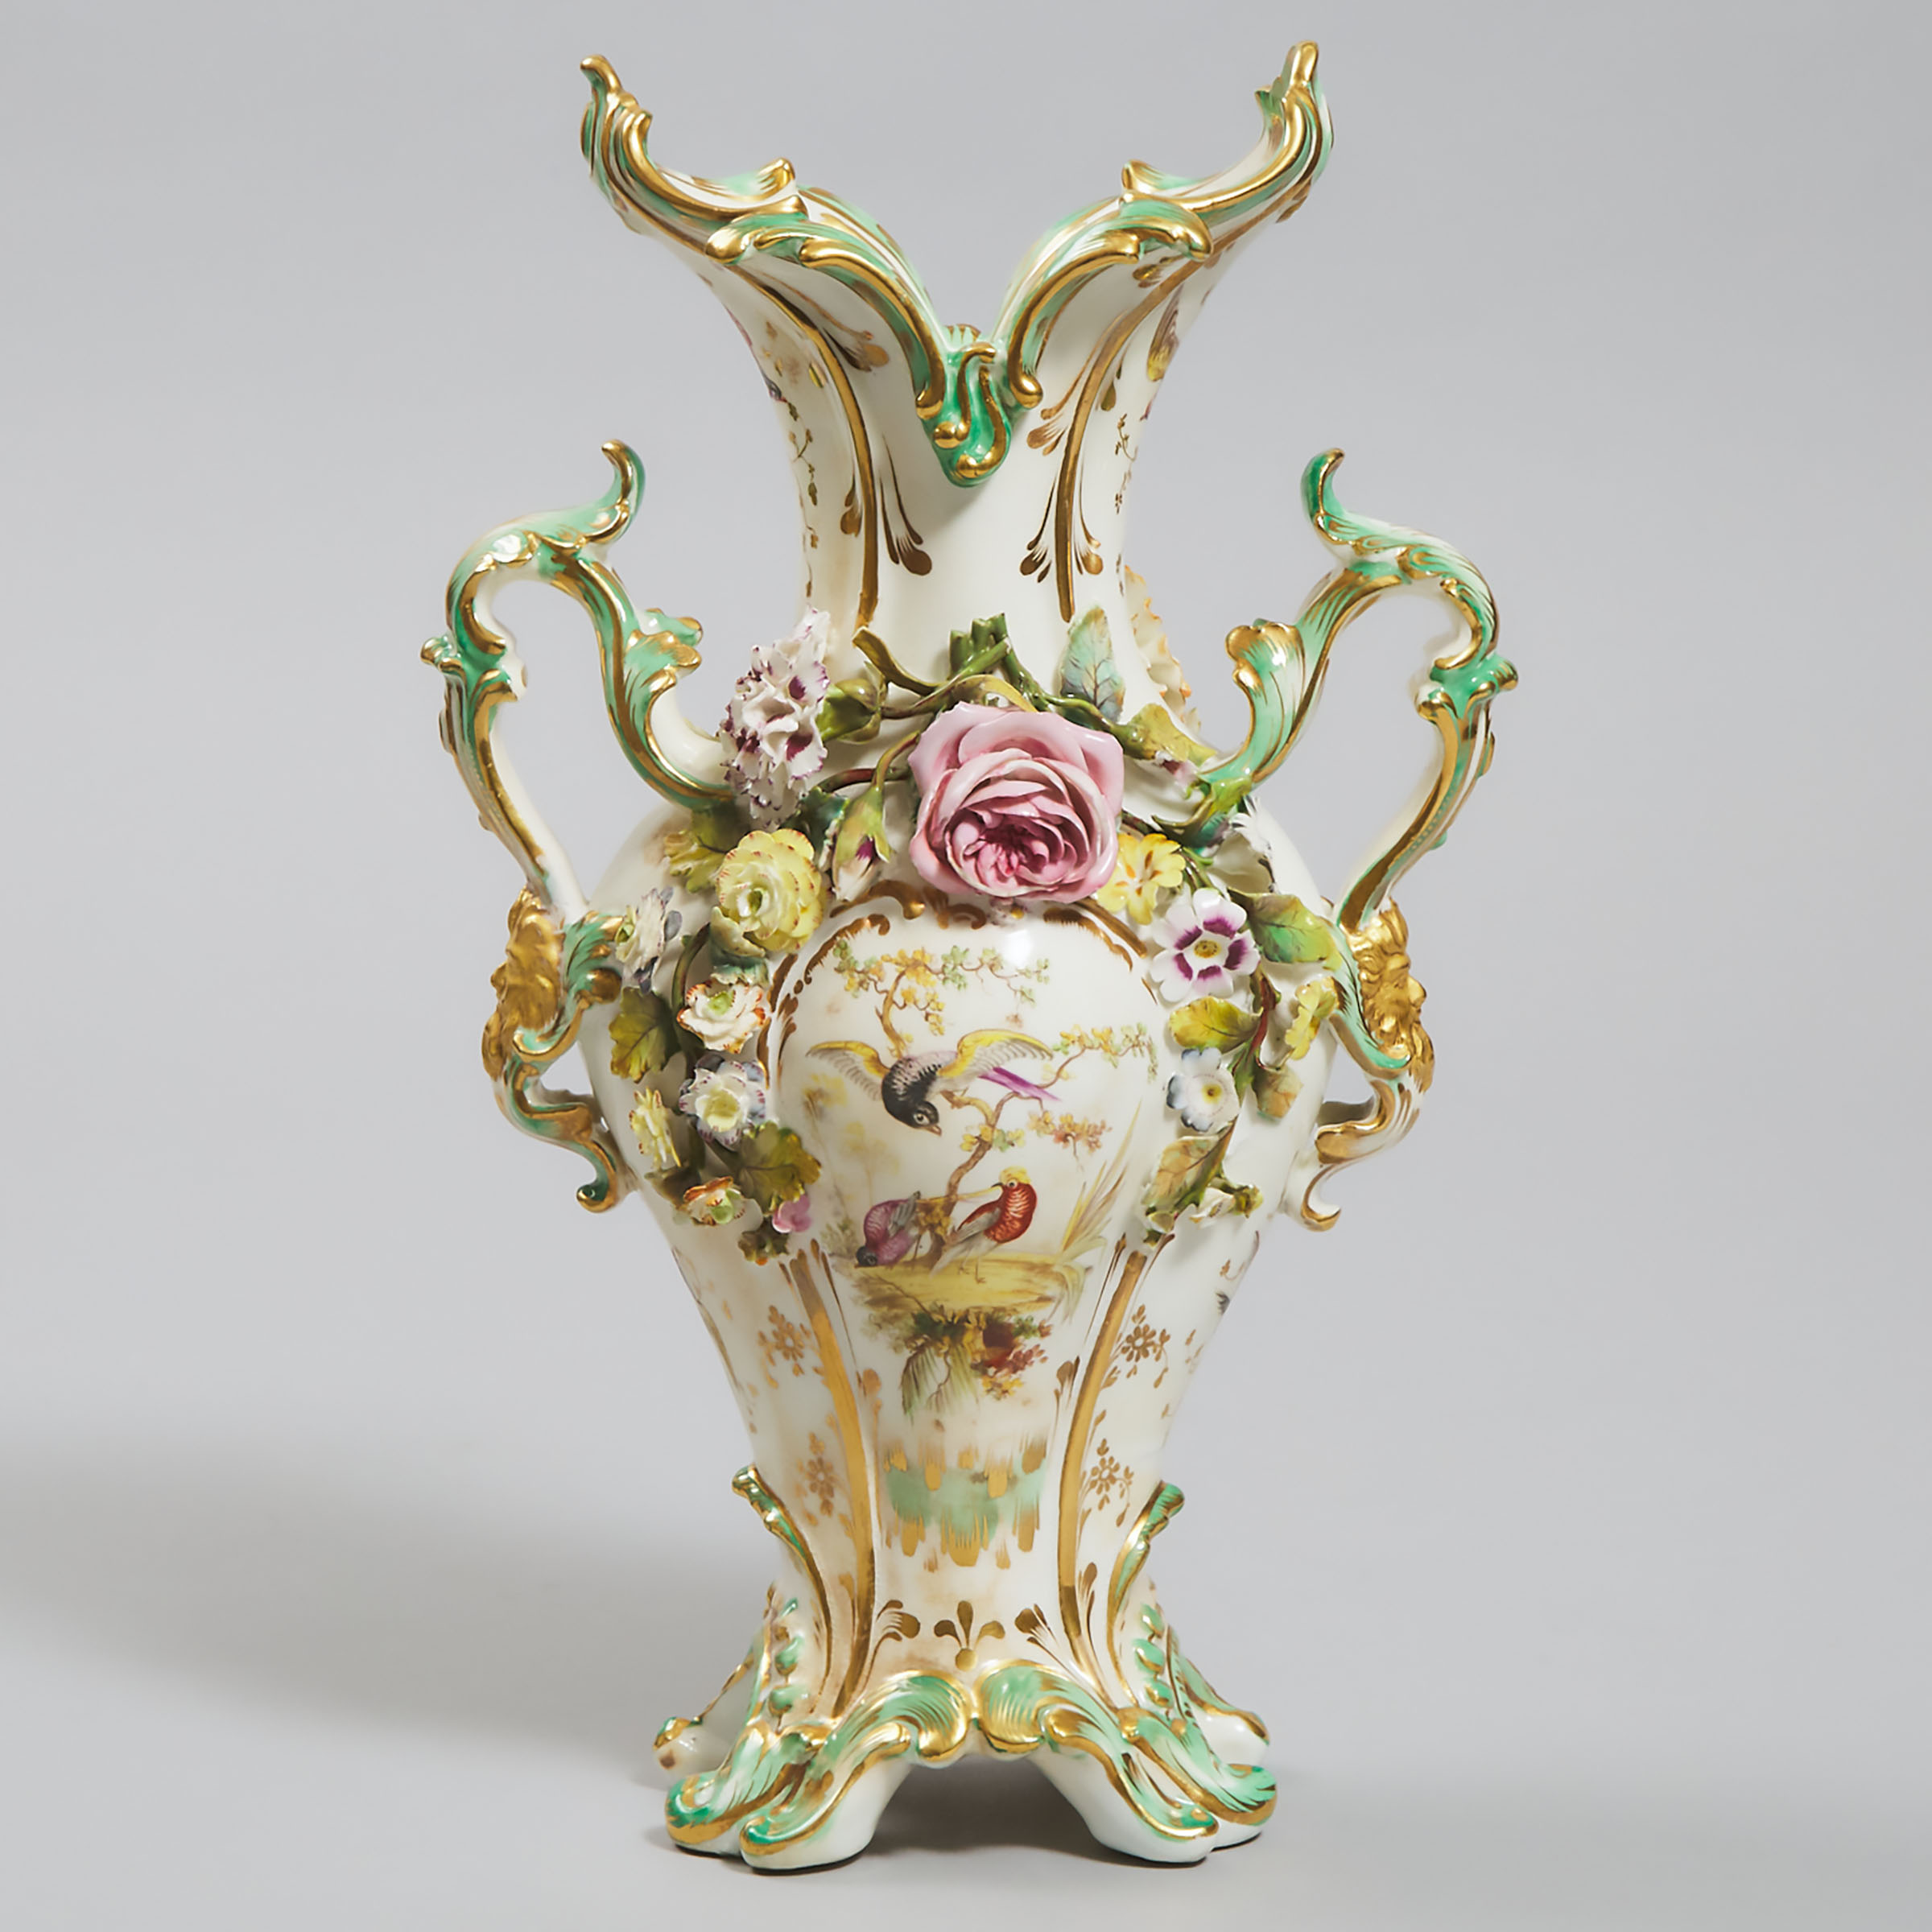 Coalbrookdale Two-Handled Vase, c.1830-40